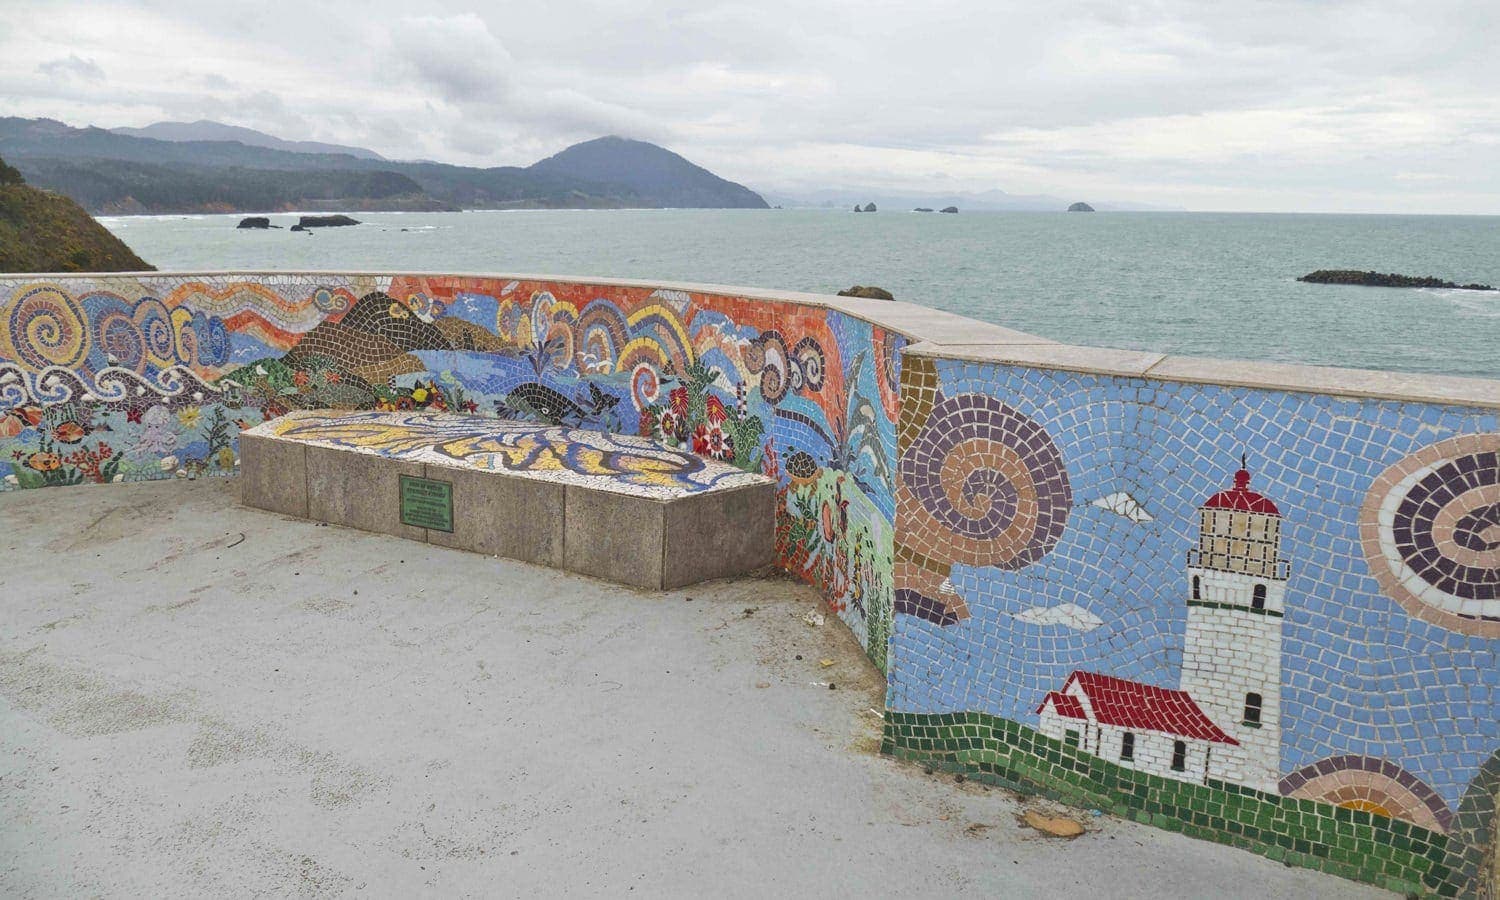 Port Orford boardwalk murals overlooking the water